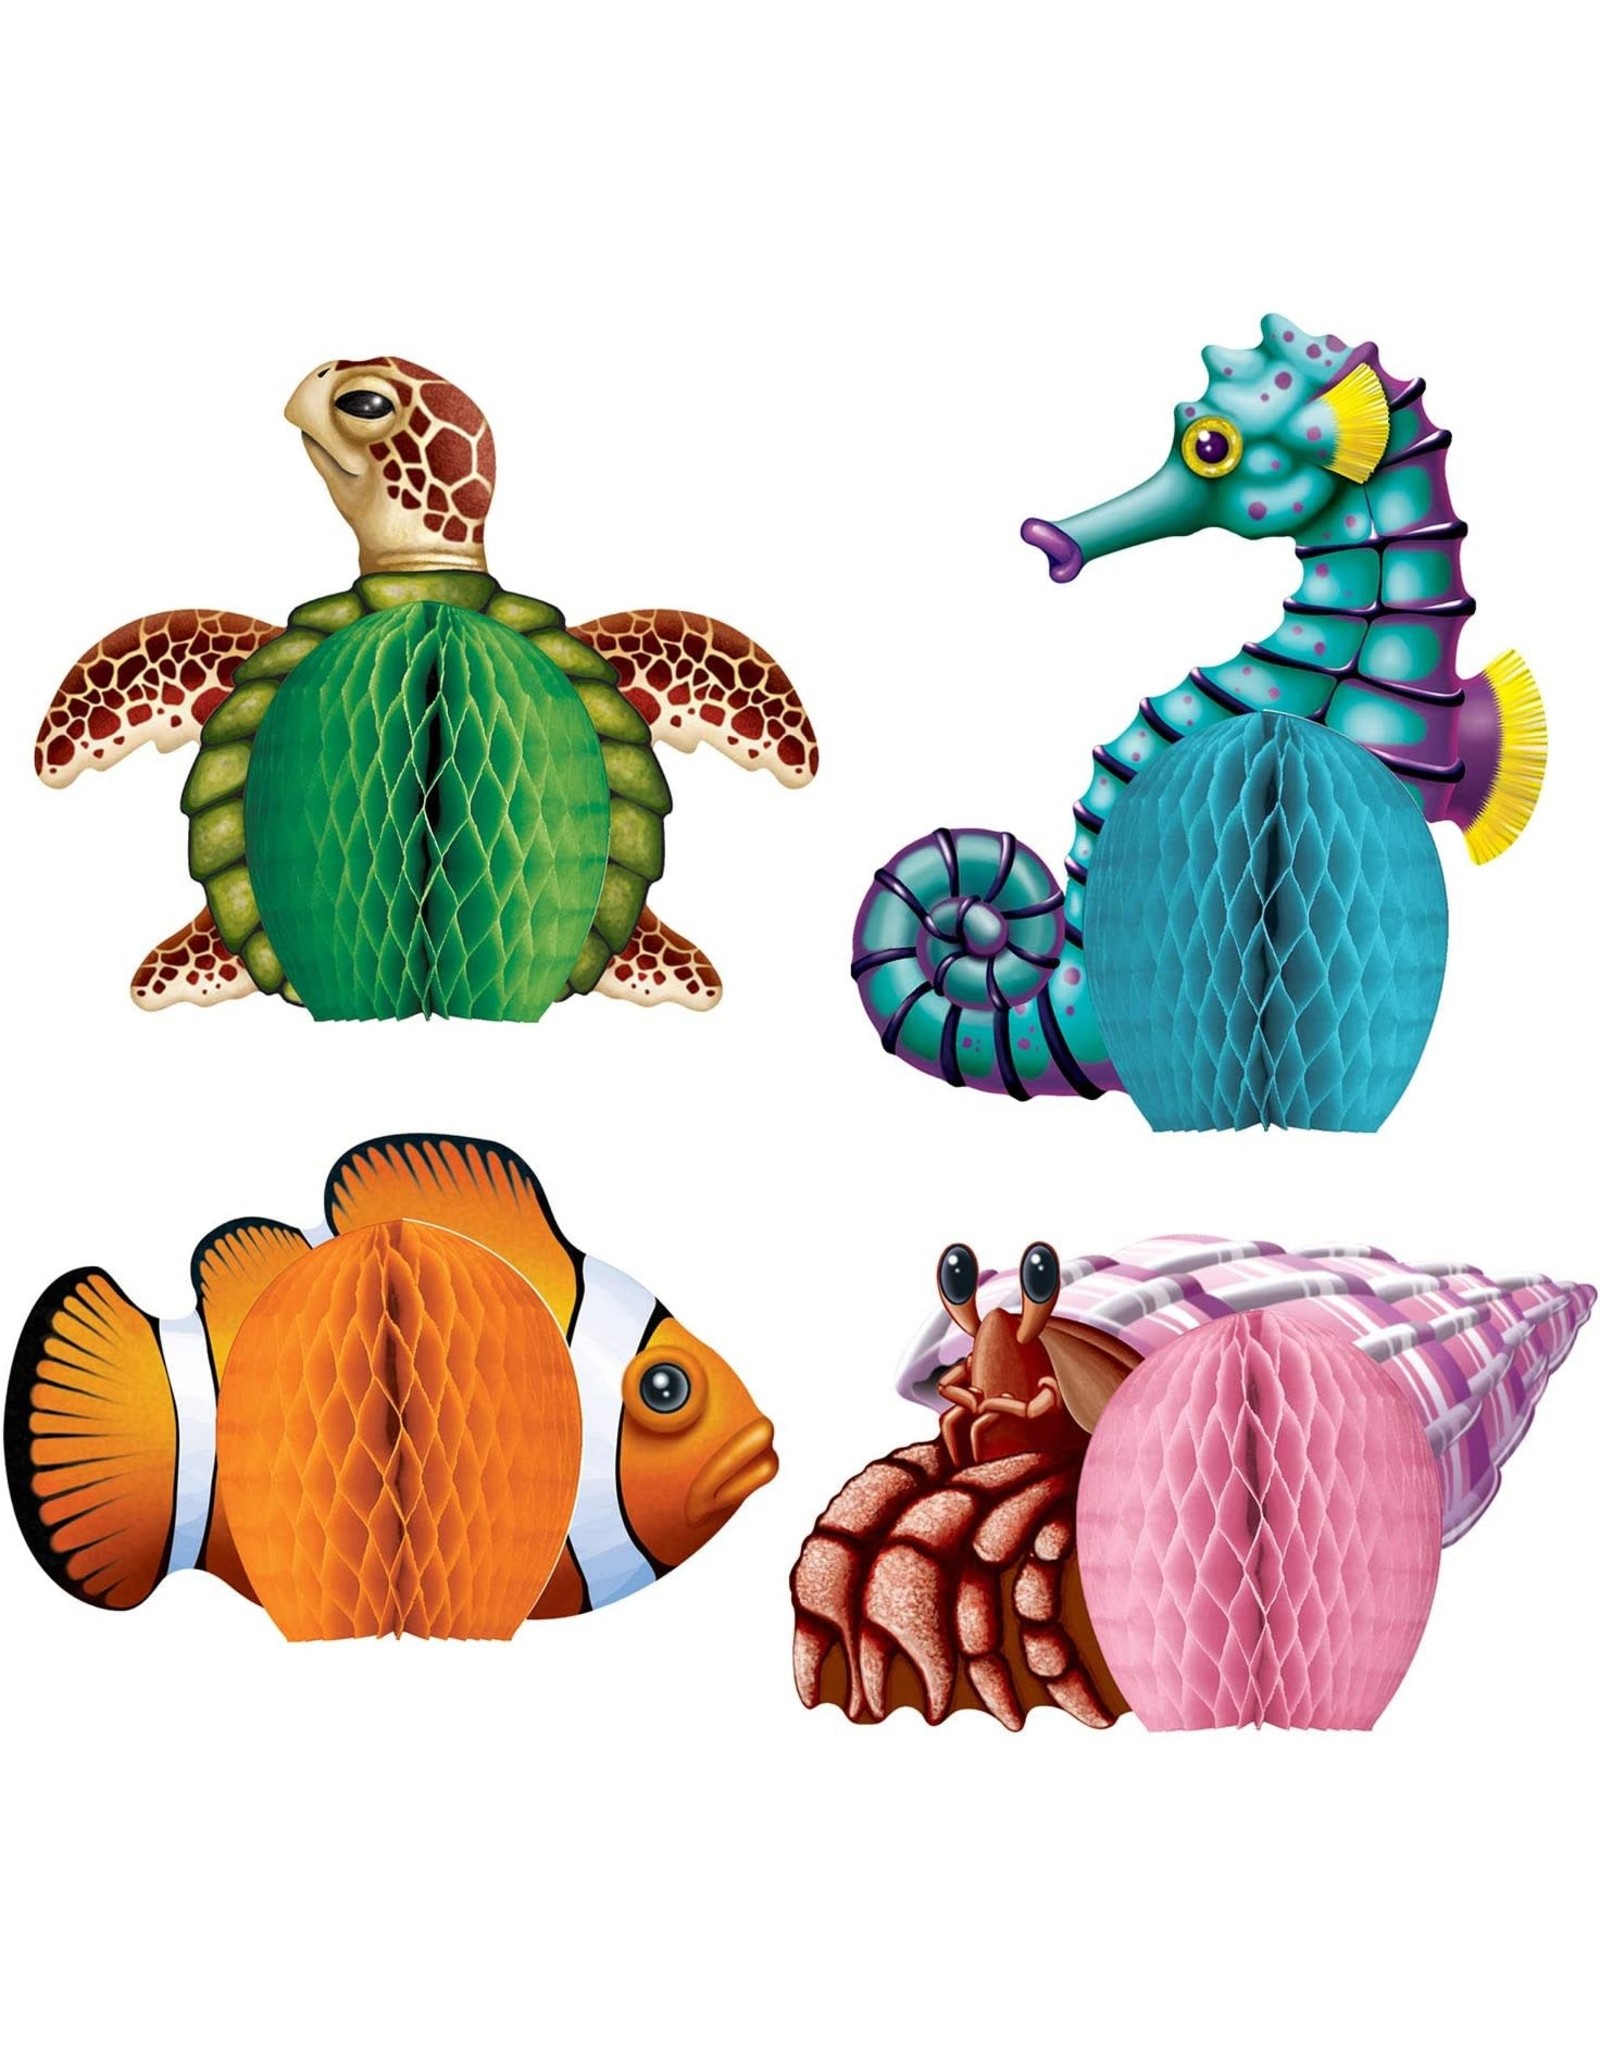 Beistle Sea Creatures Mini Centerpieces 5.5 Inch Assorted 4pc Set